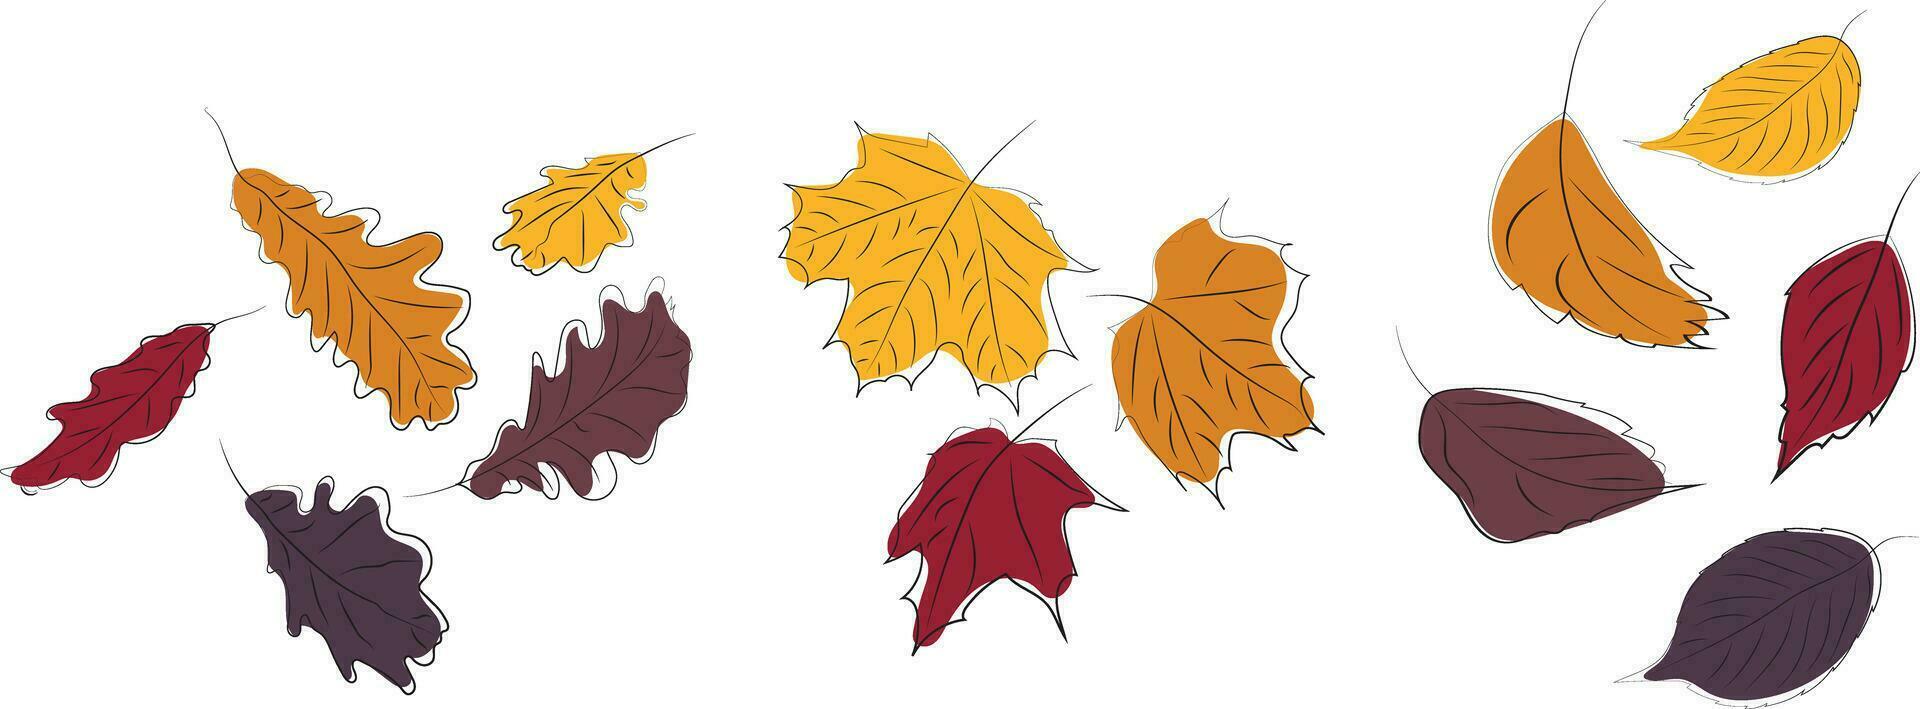 Linie Kunst mit Farbe. Herbst Blätter. hoch Qualität Vektor Illustration.